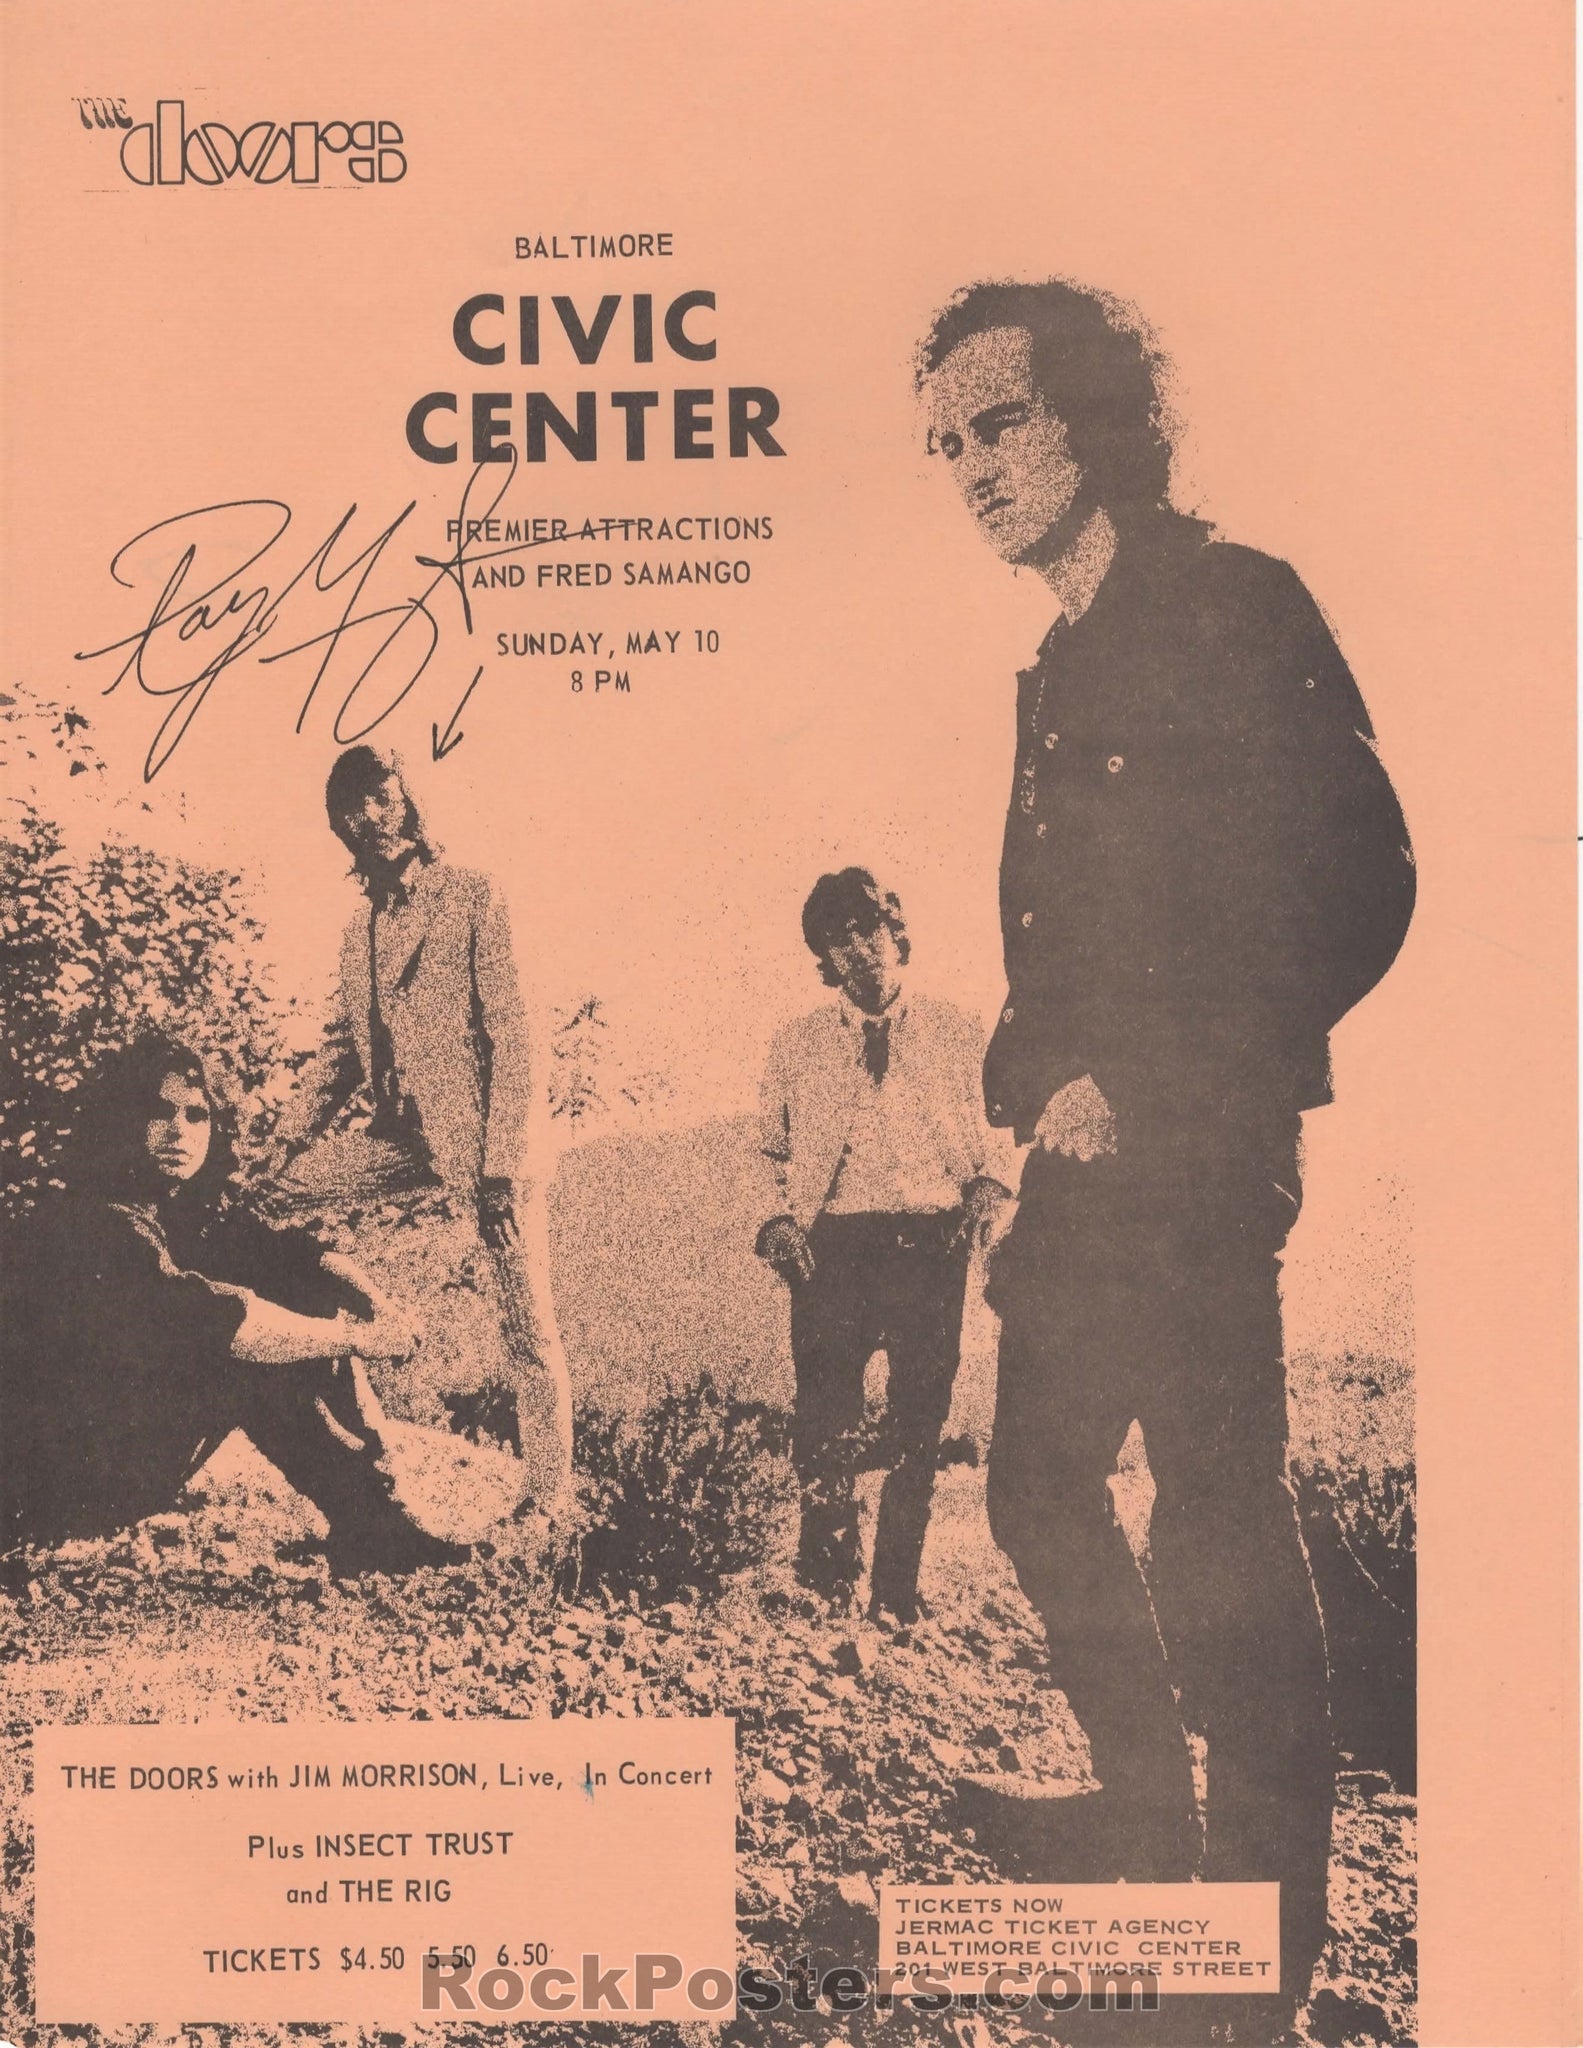 AUCTION - The Doors - Ray Manzarek Signed 1970 Baltimore Concert Handbill - Condition - Near Mint Minus